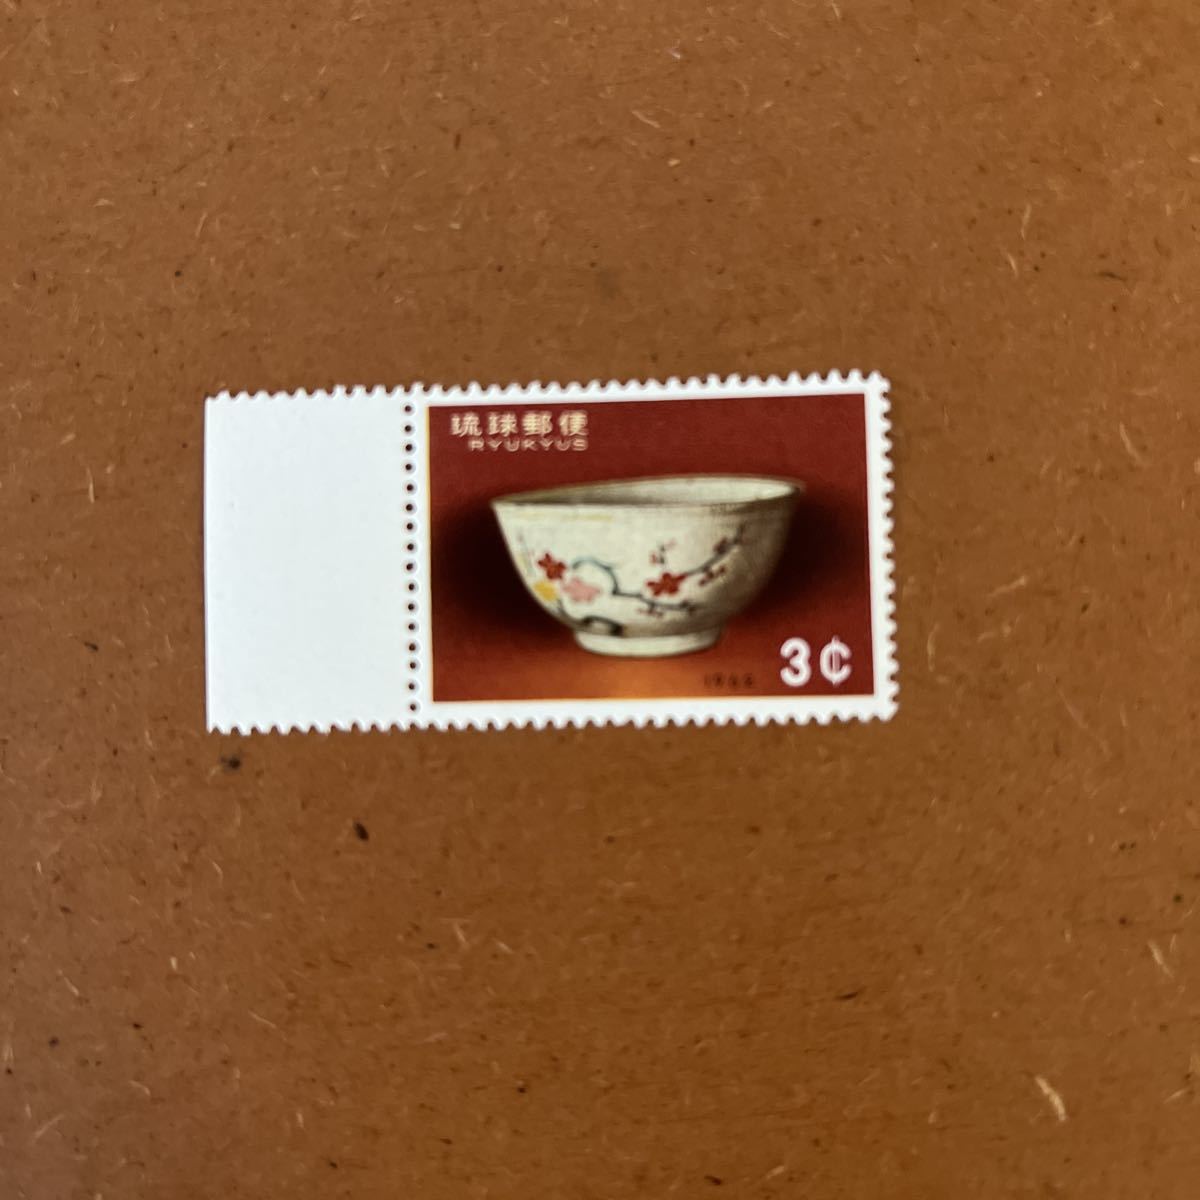 琉球切手・1962. 切手趣味週間 ・3¢ ・赤絵わん・  未使用切手  の画像1